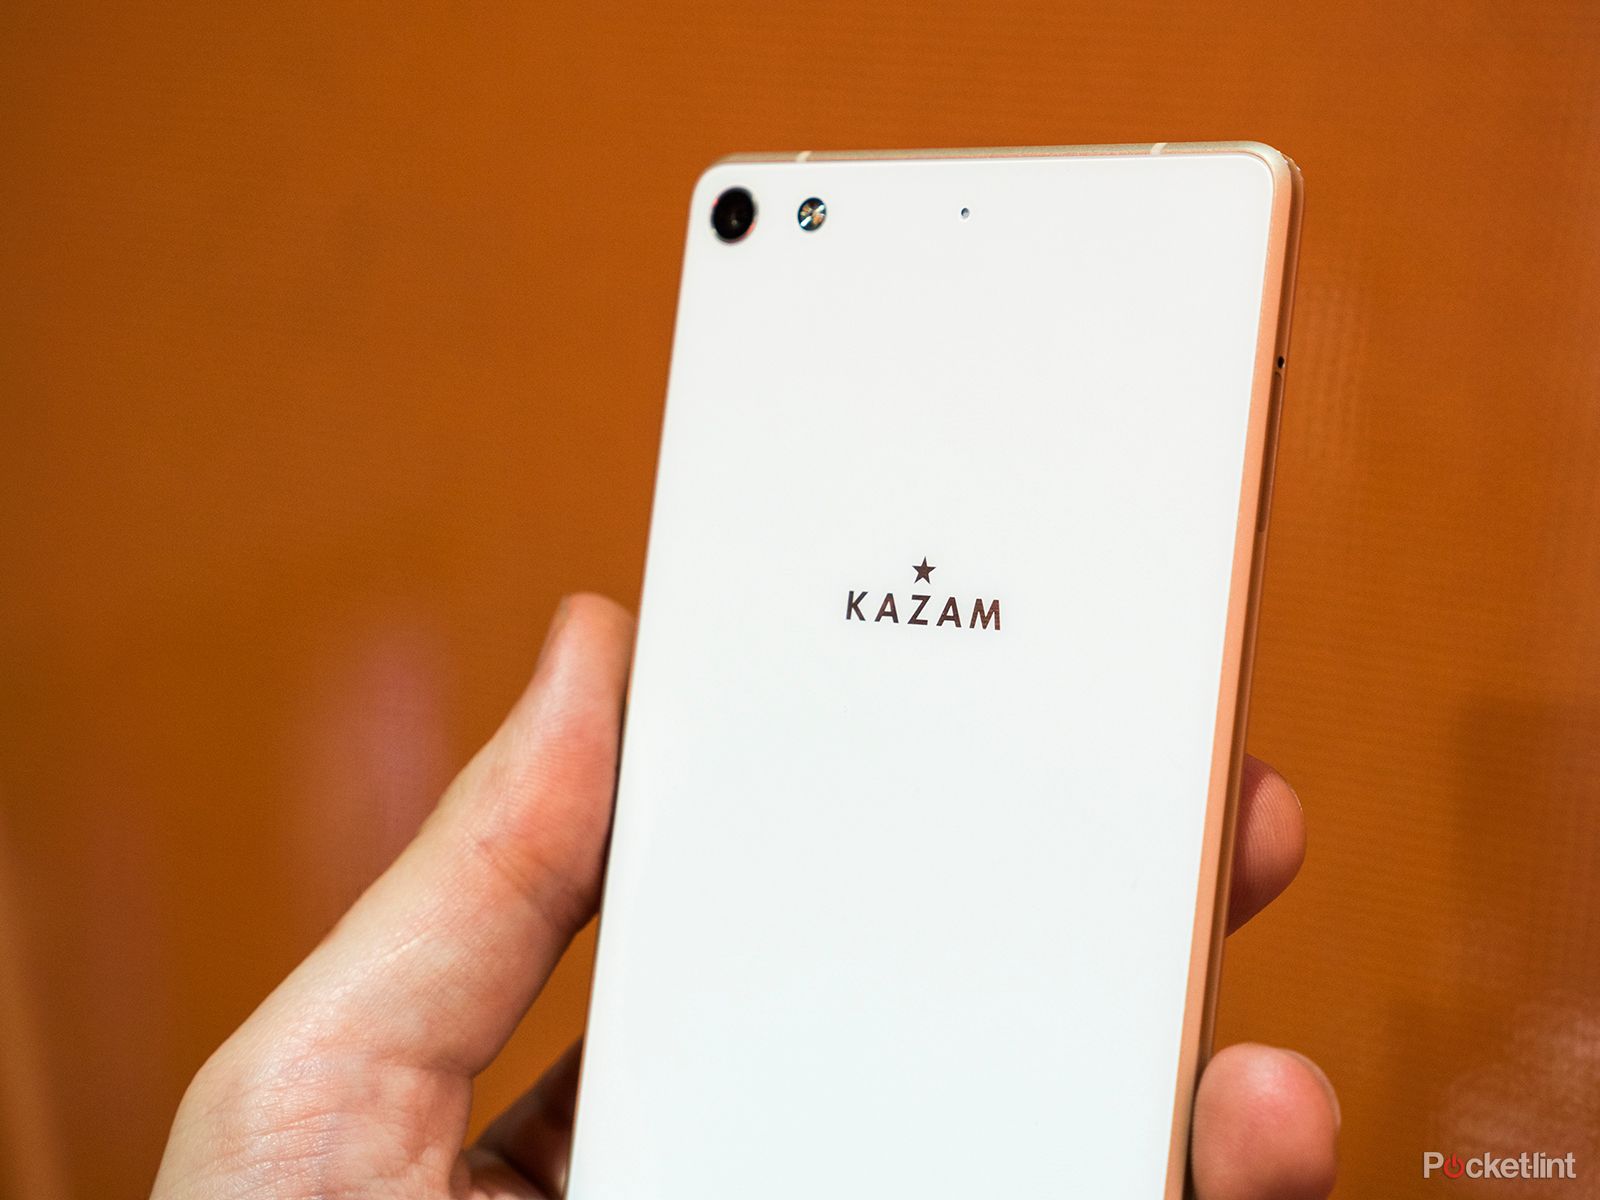 kazam tornado 552l slender 5 2 inch smartphone has got the looks hands on image 4